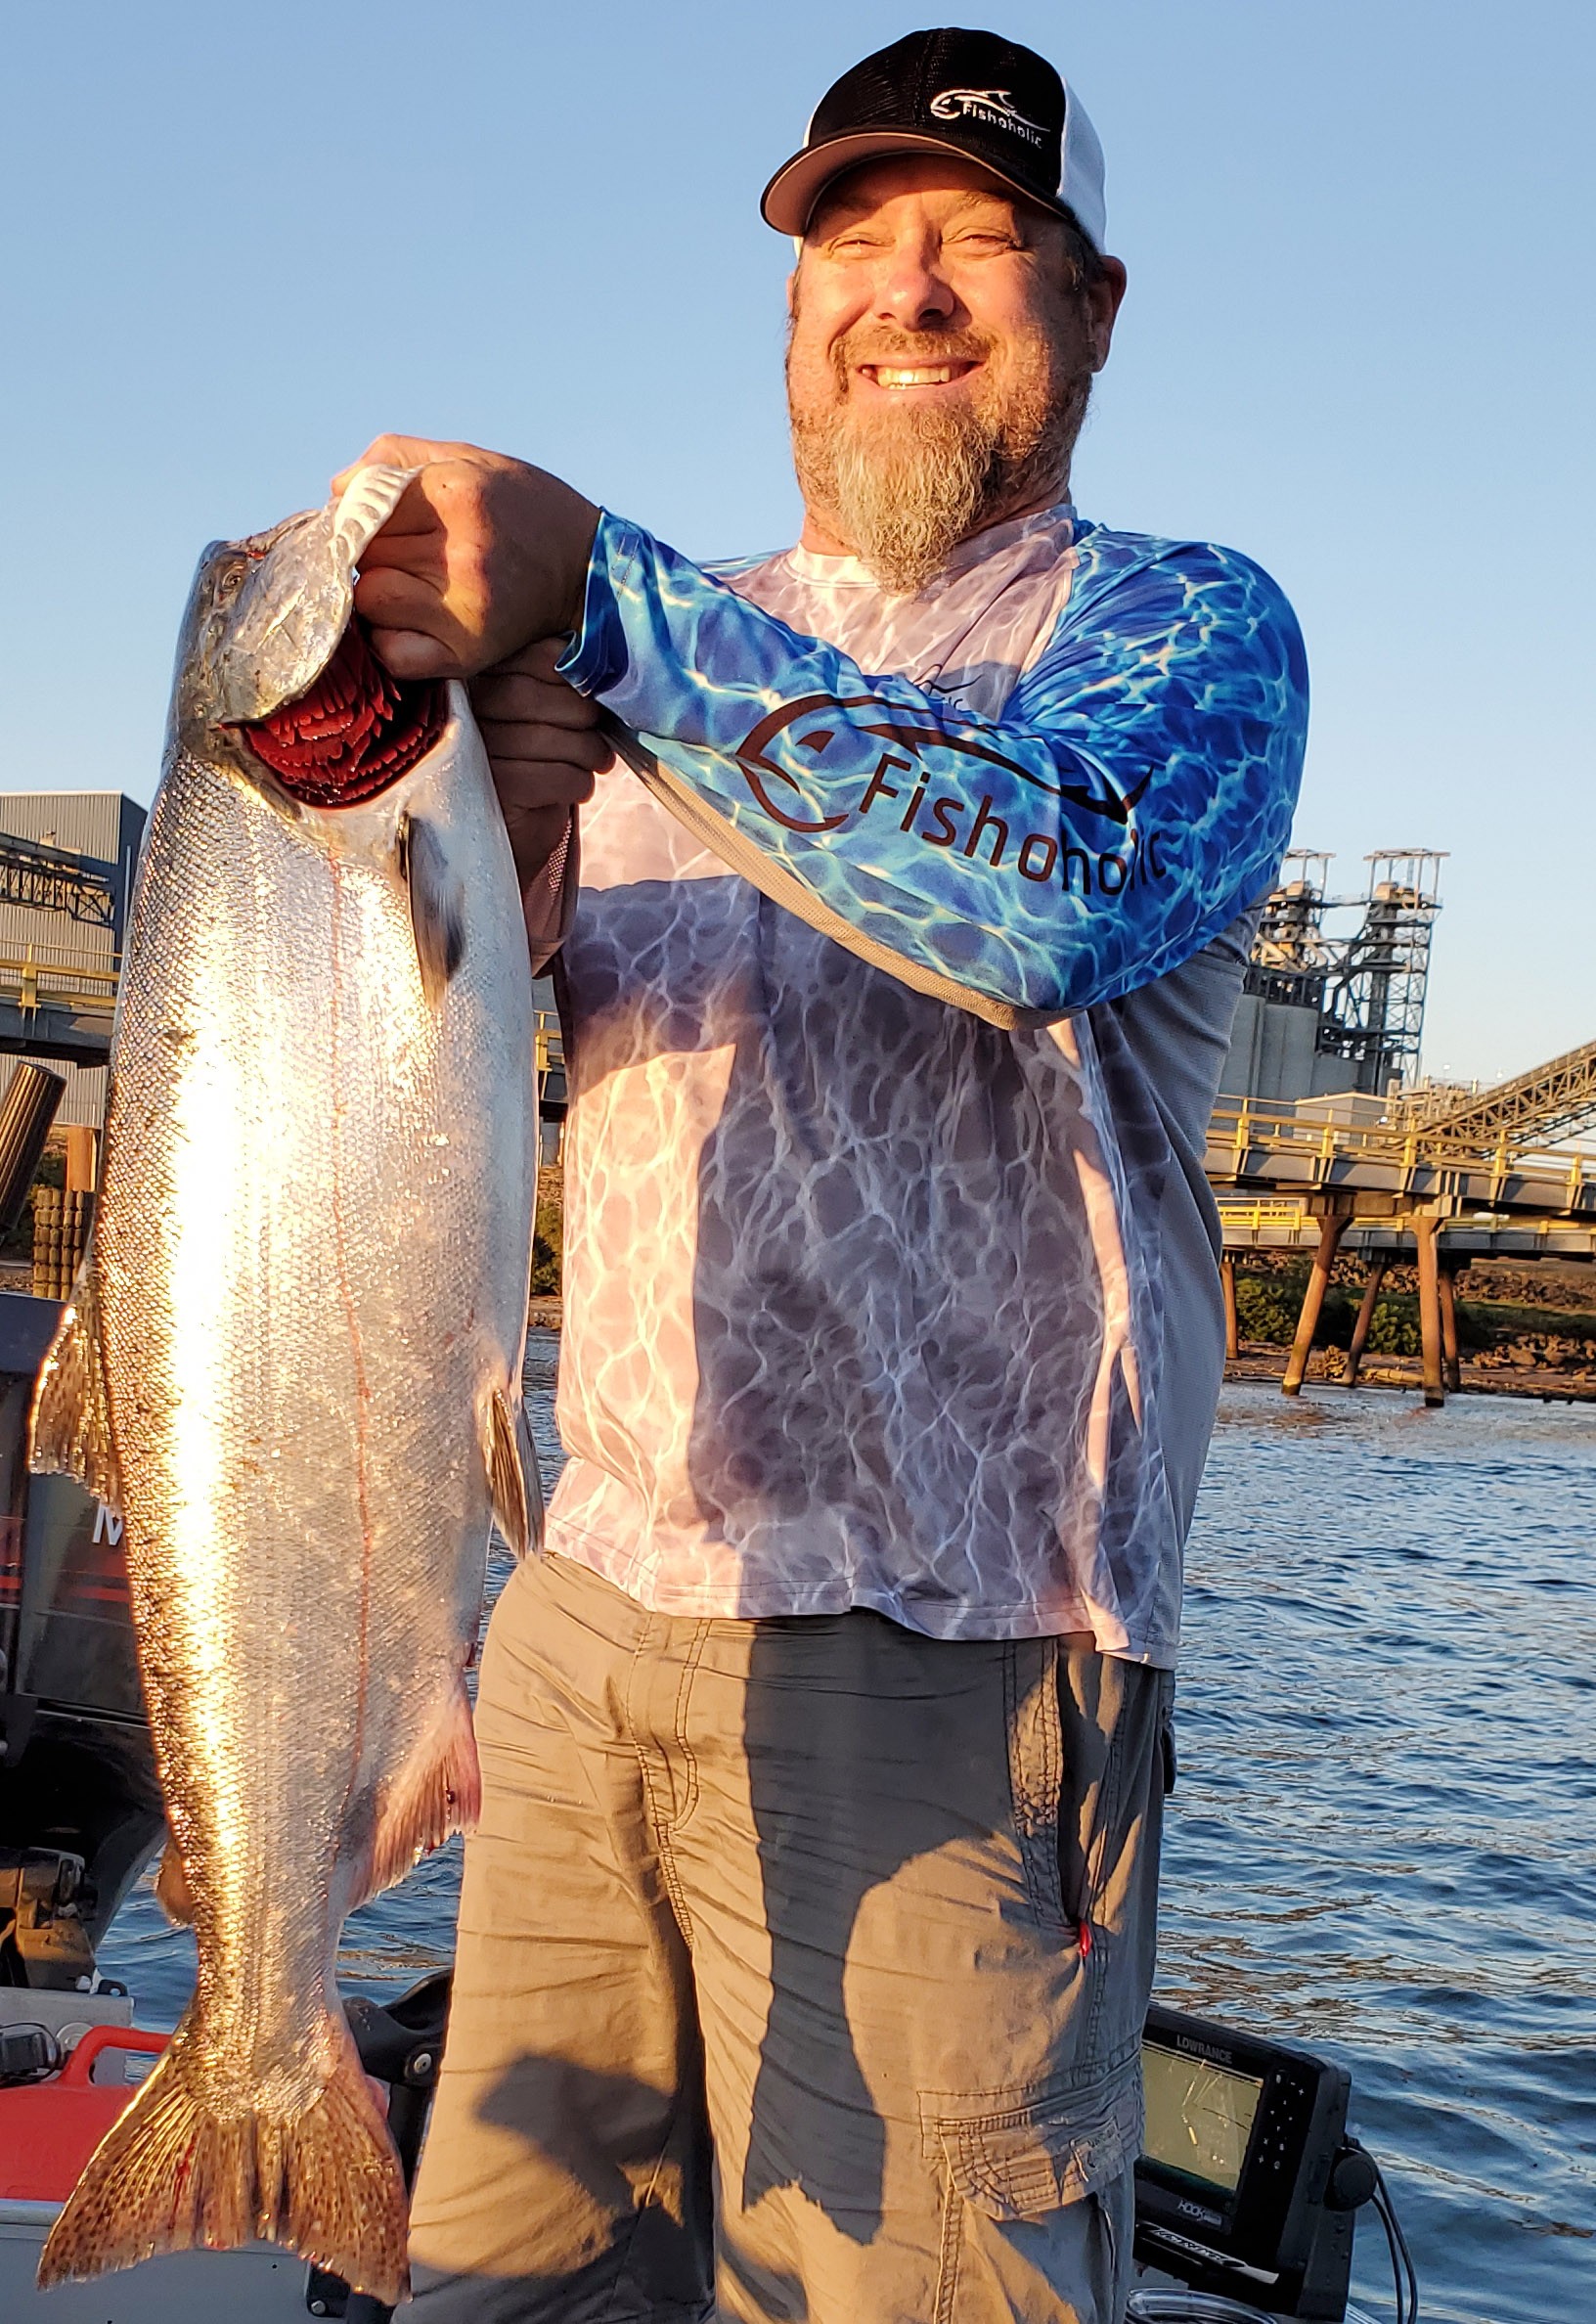 Man holding up a large fish wearing Fishoholic fishing shirt